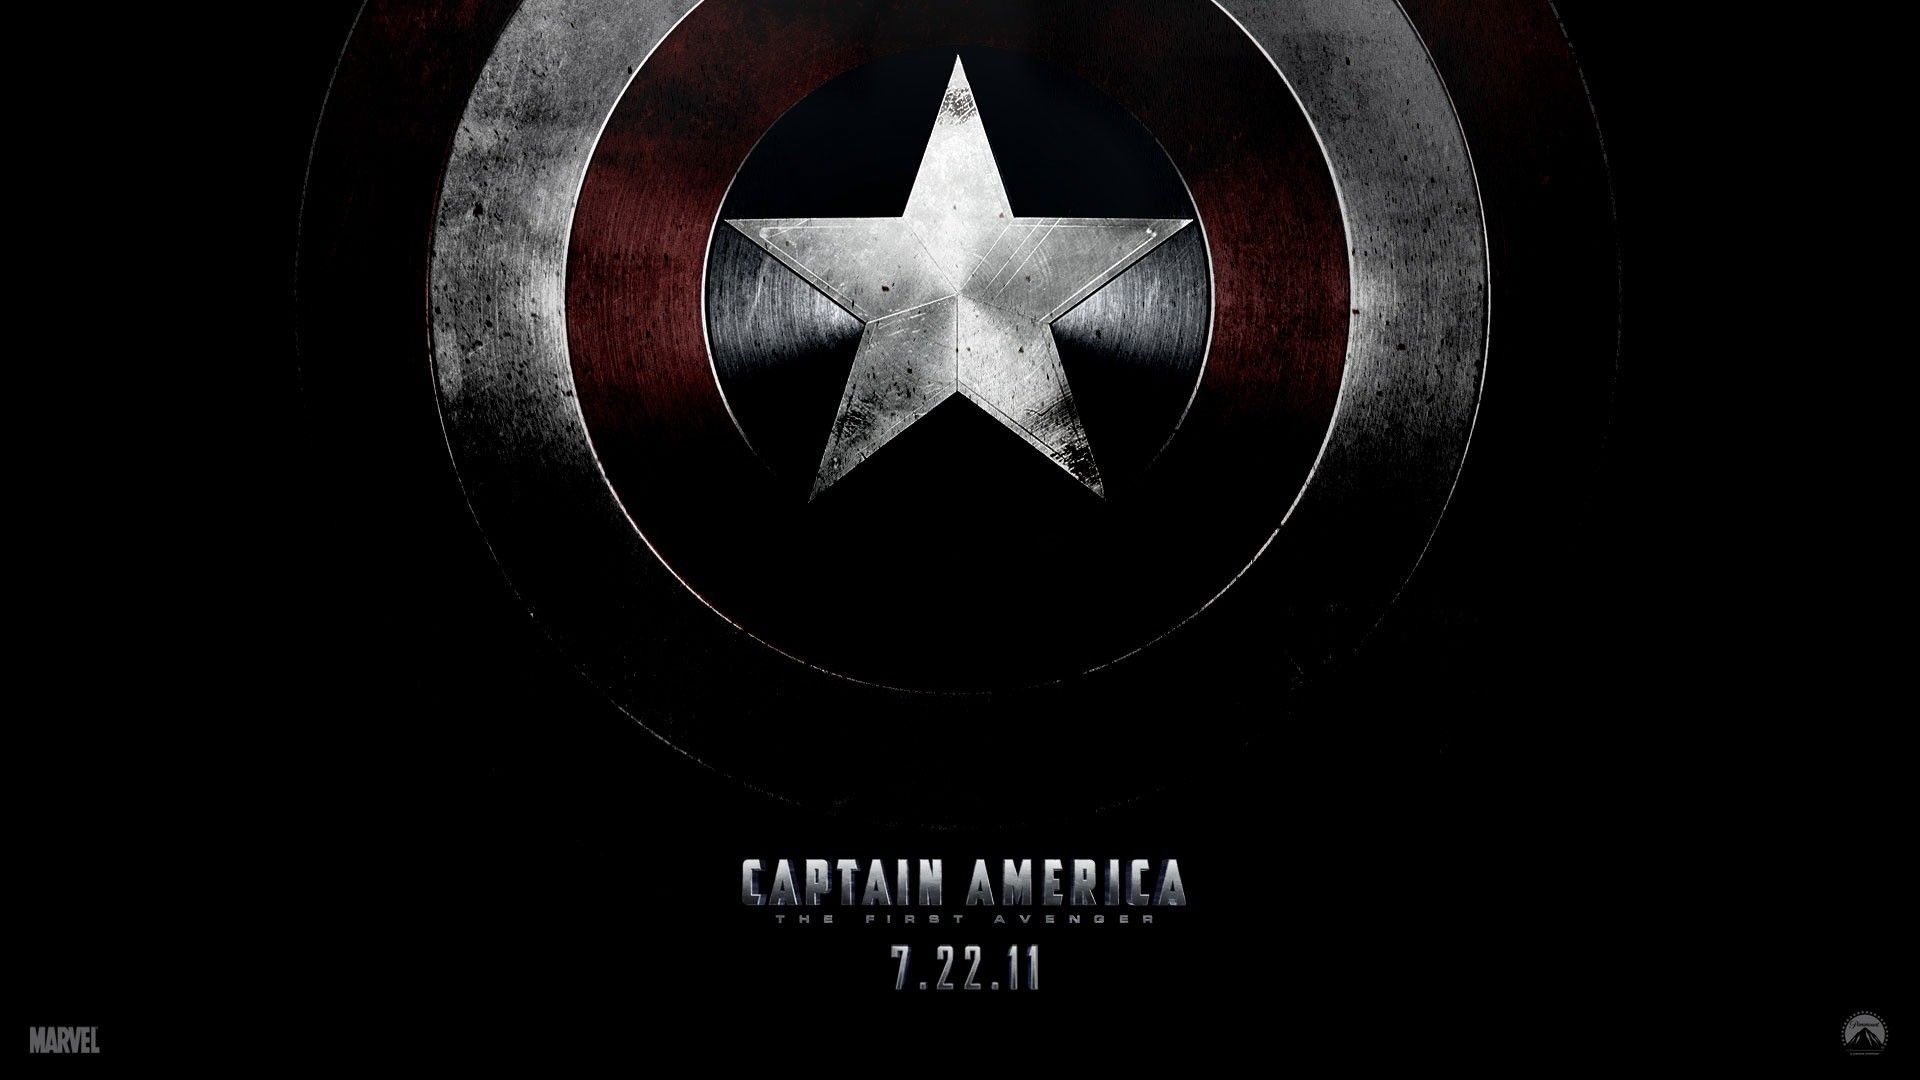 Cool The First Avenger Captain America Movie Wallpaper